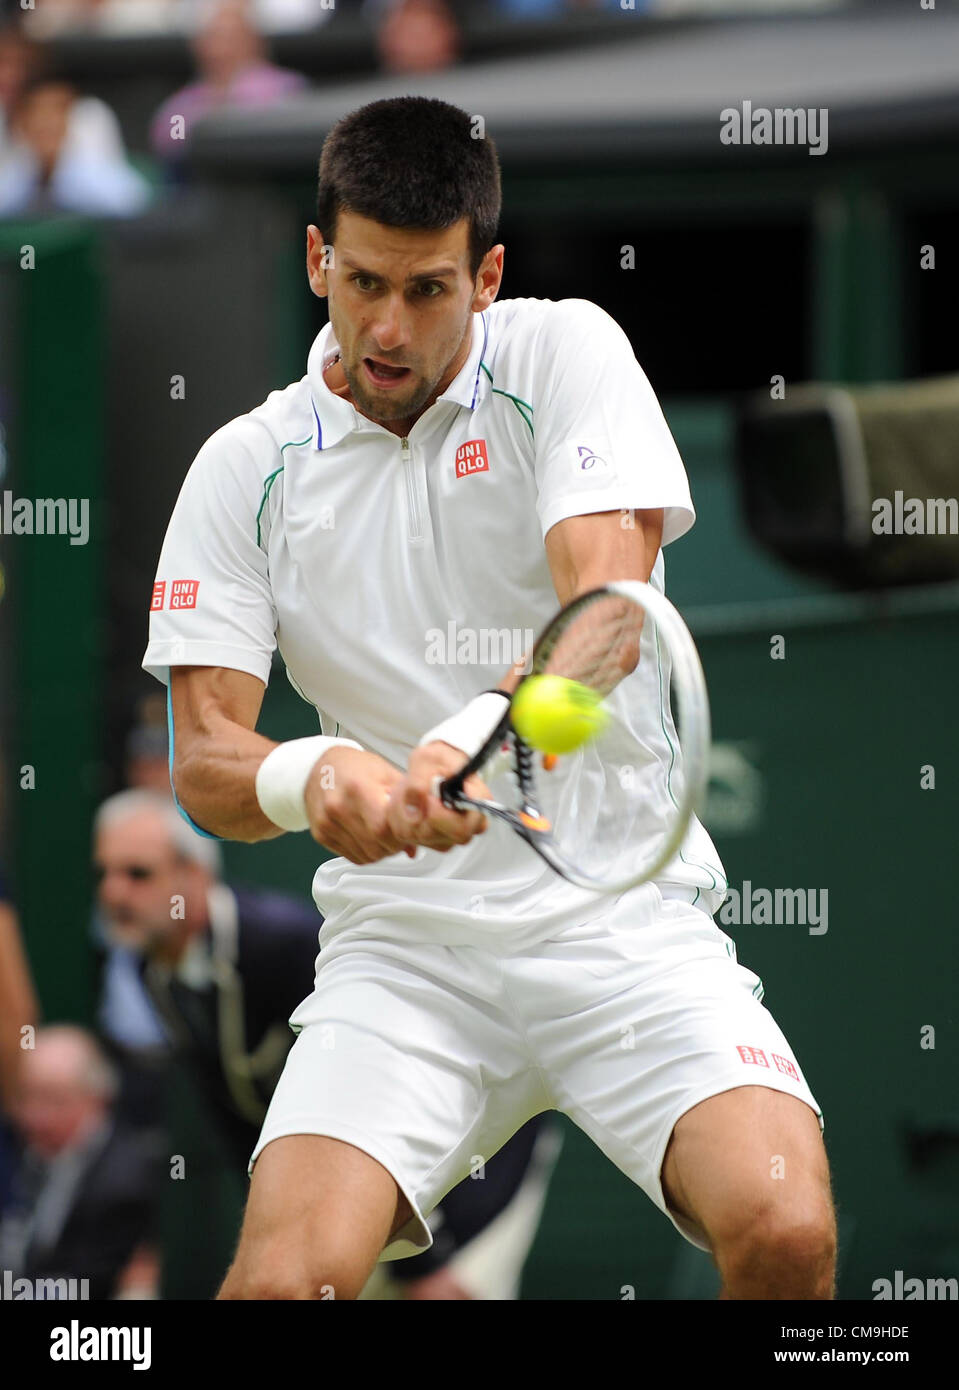 NOVAK DJOKOVIC SERBIA del All England Club de Tenis de Wimbledon en Londres, Inglaterra, 29 de junio de 2012 Foto de stock